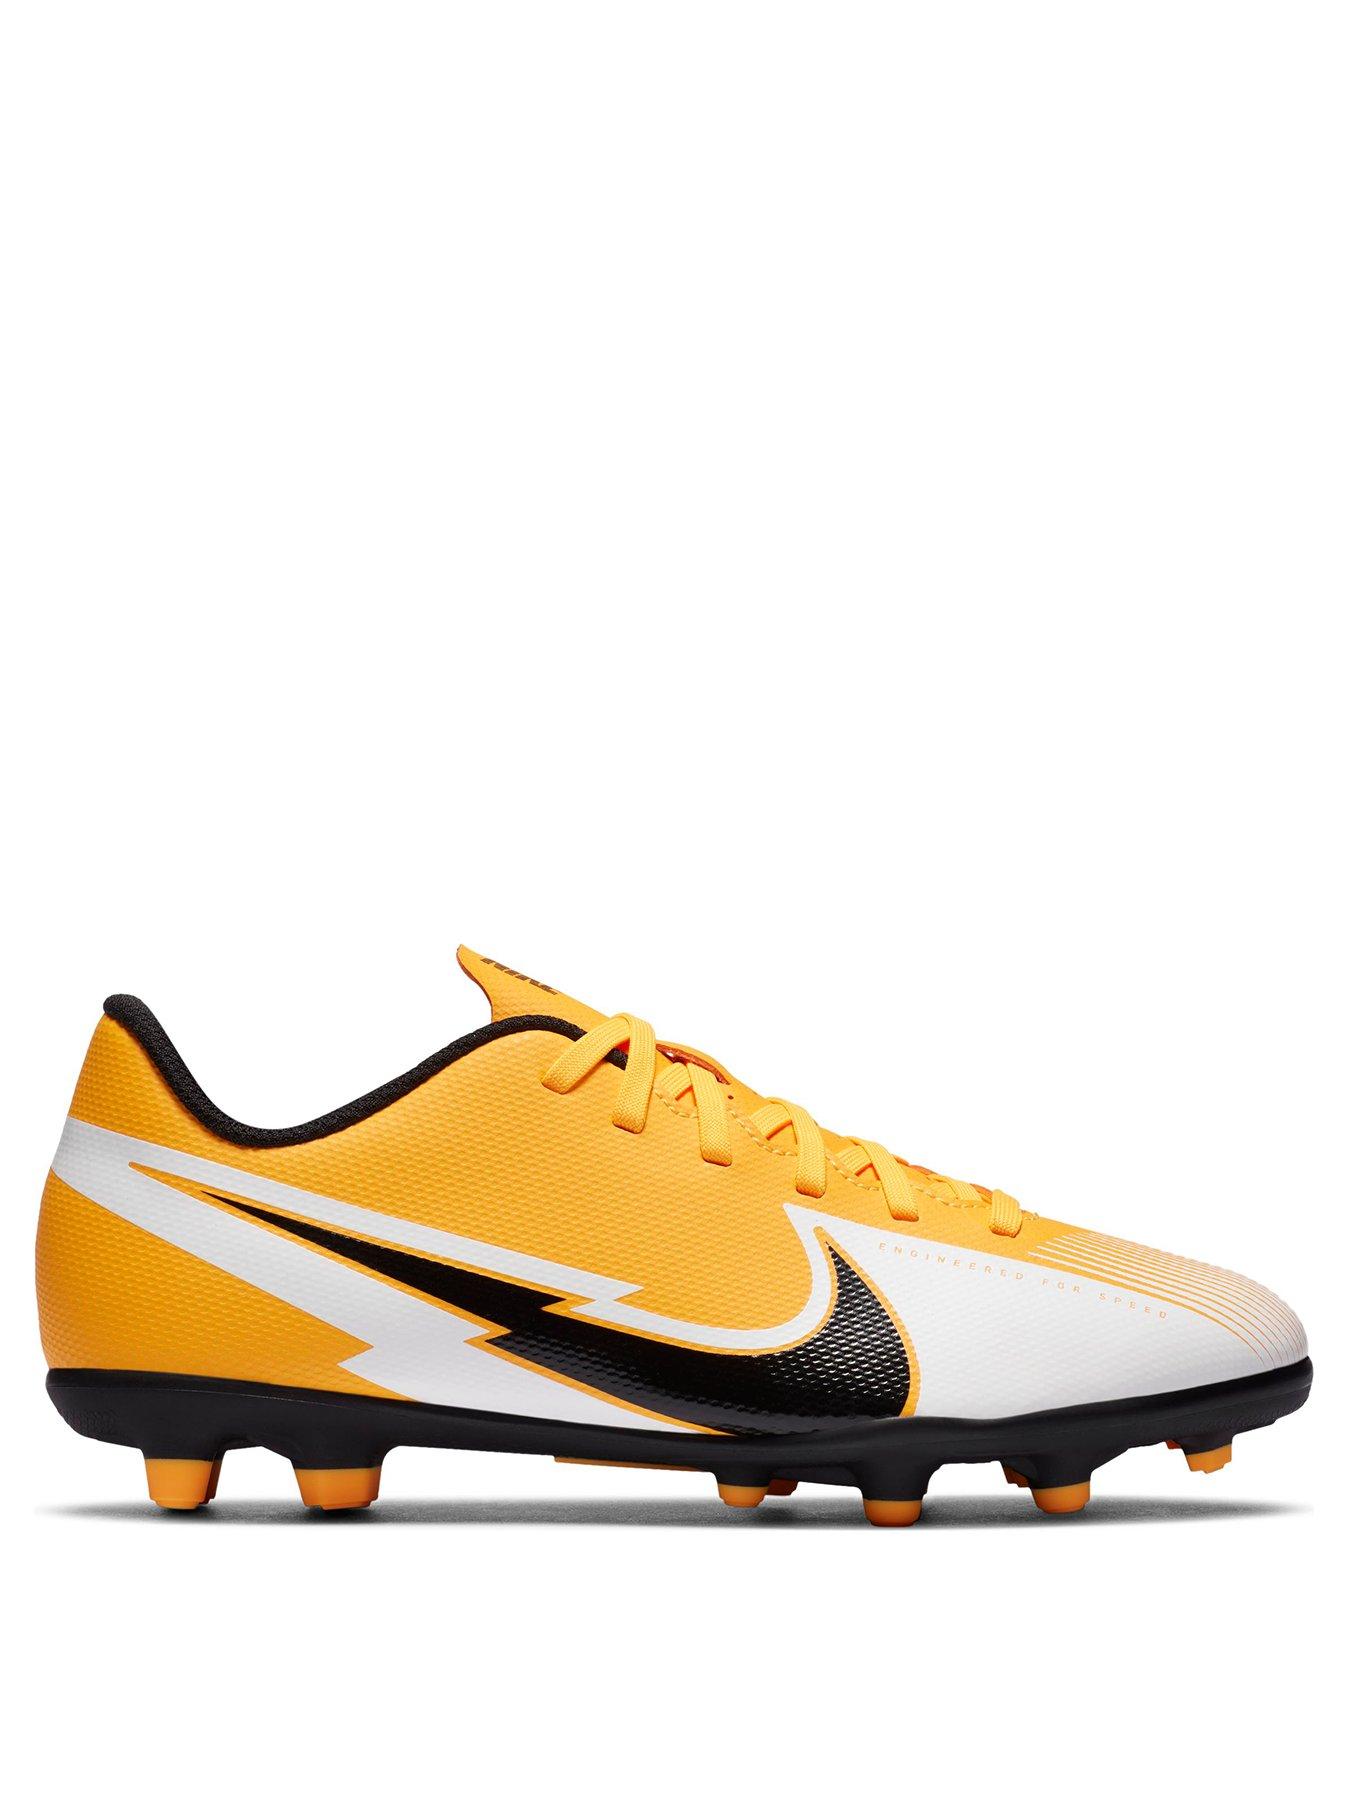 Football Boots | Junior footwear (sizes 